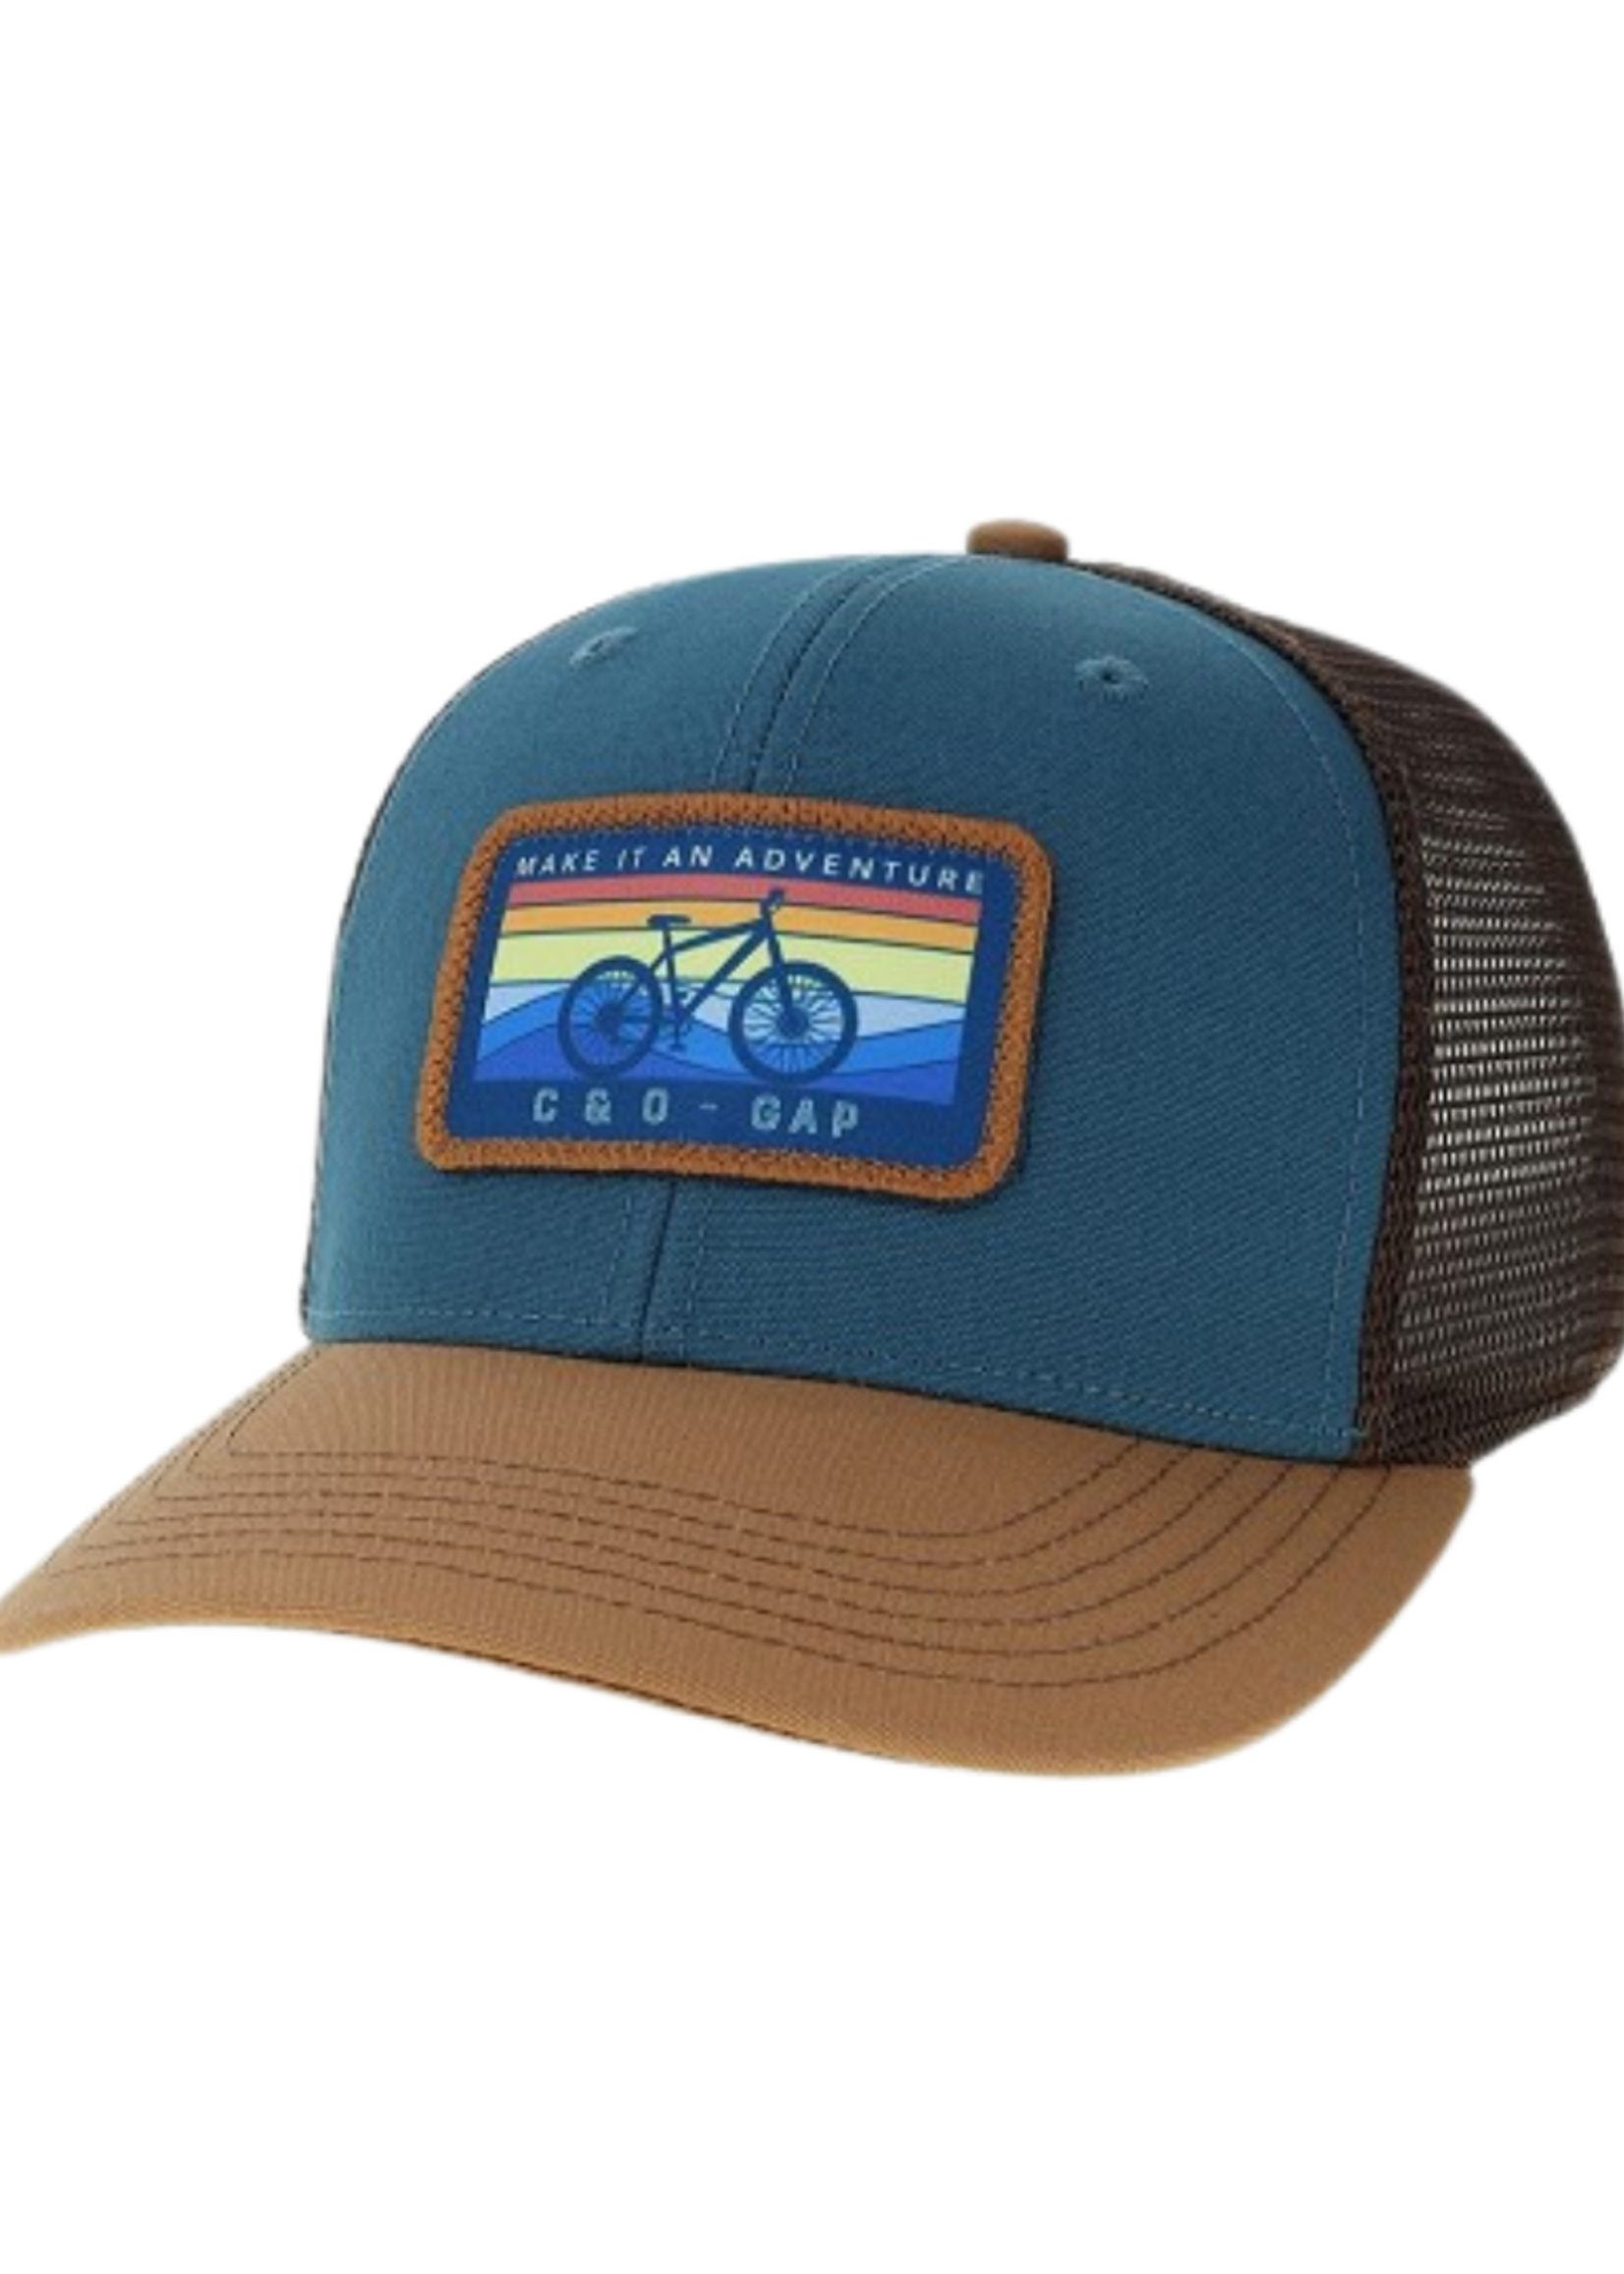 league legacy League Legacy - Make it an Adventure C&O - GAP Trucker Hat